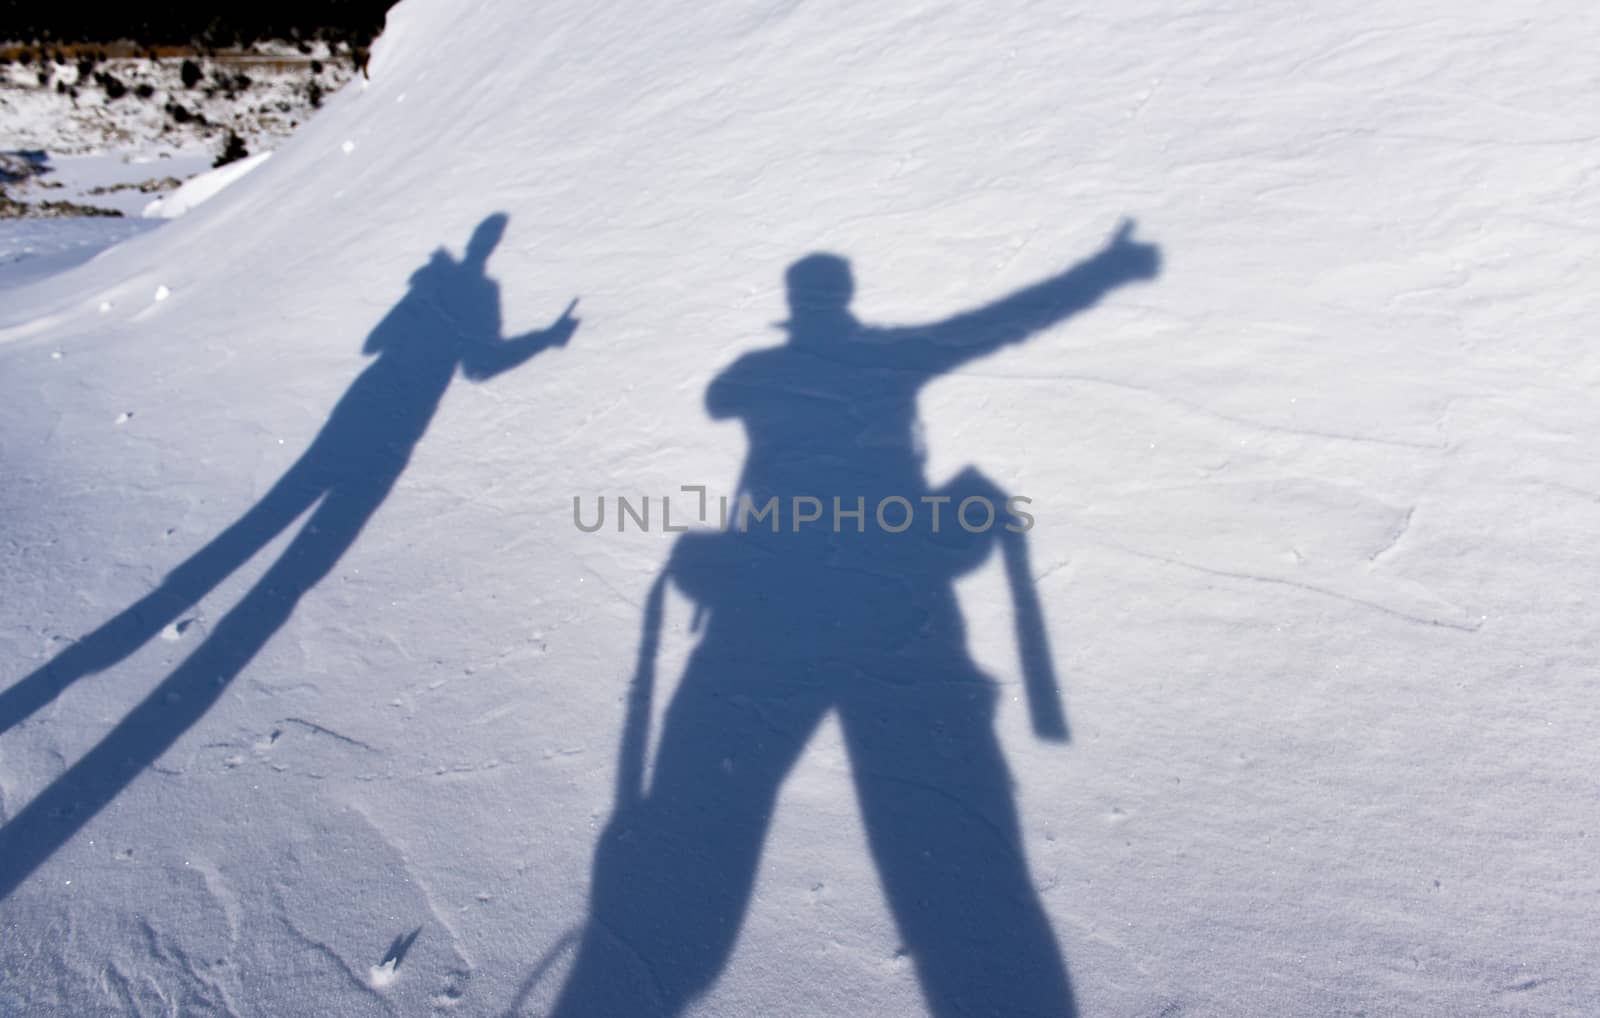 shadows of adventurous climbers